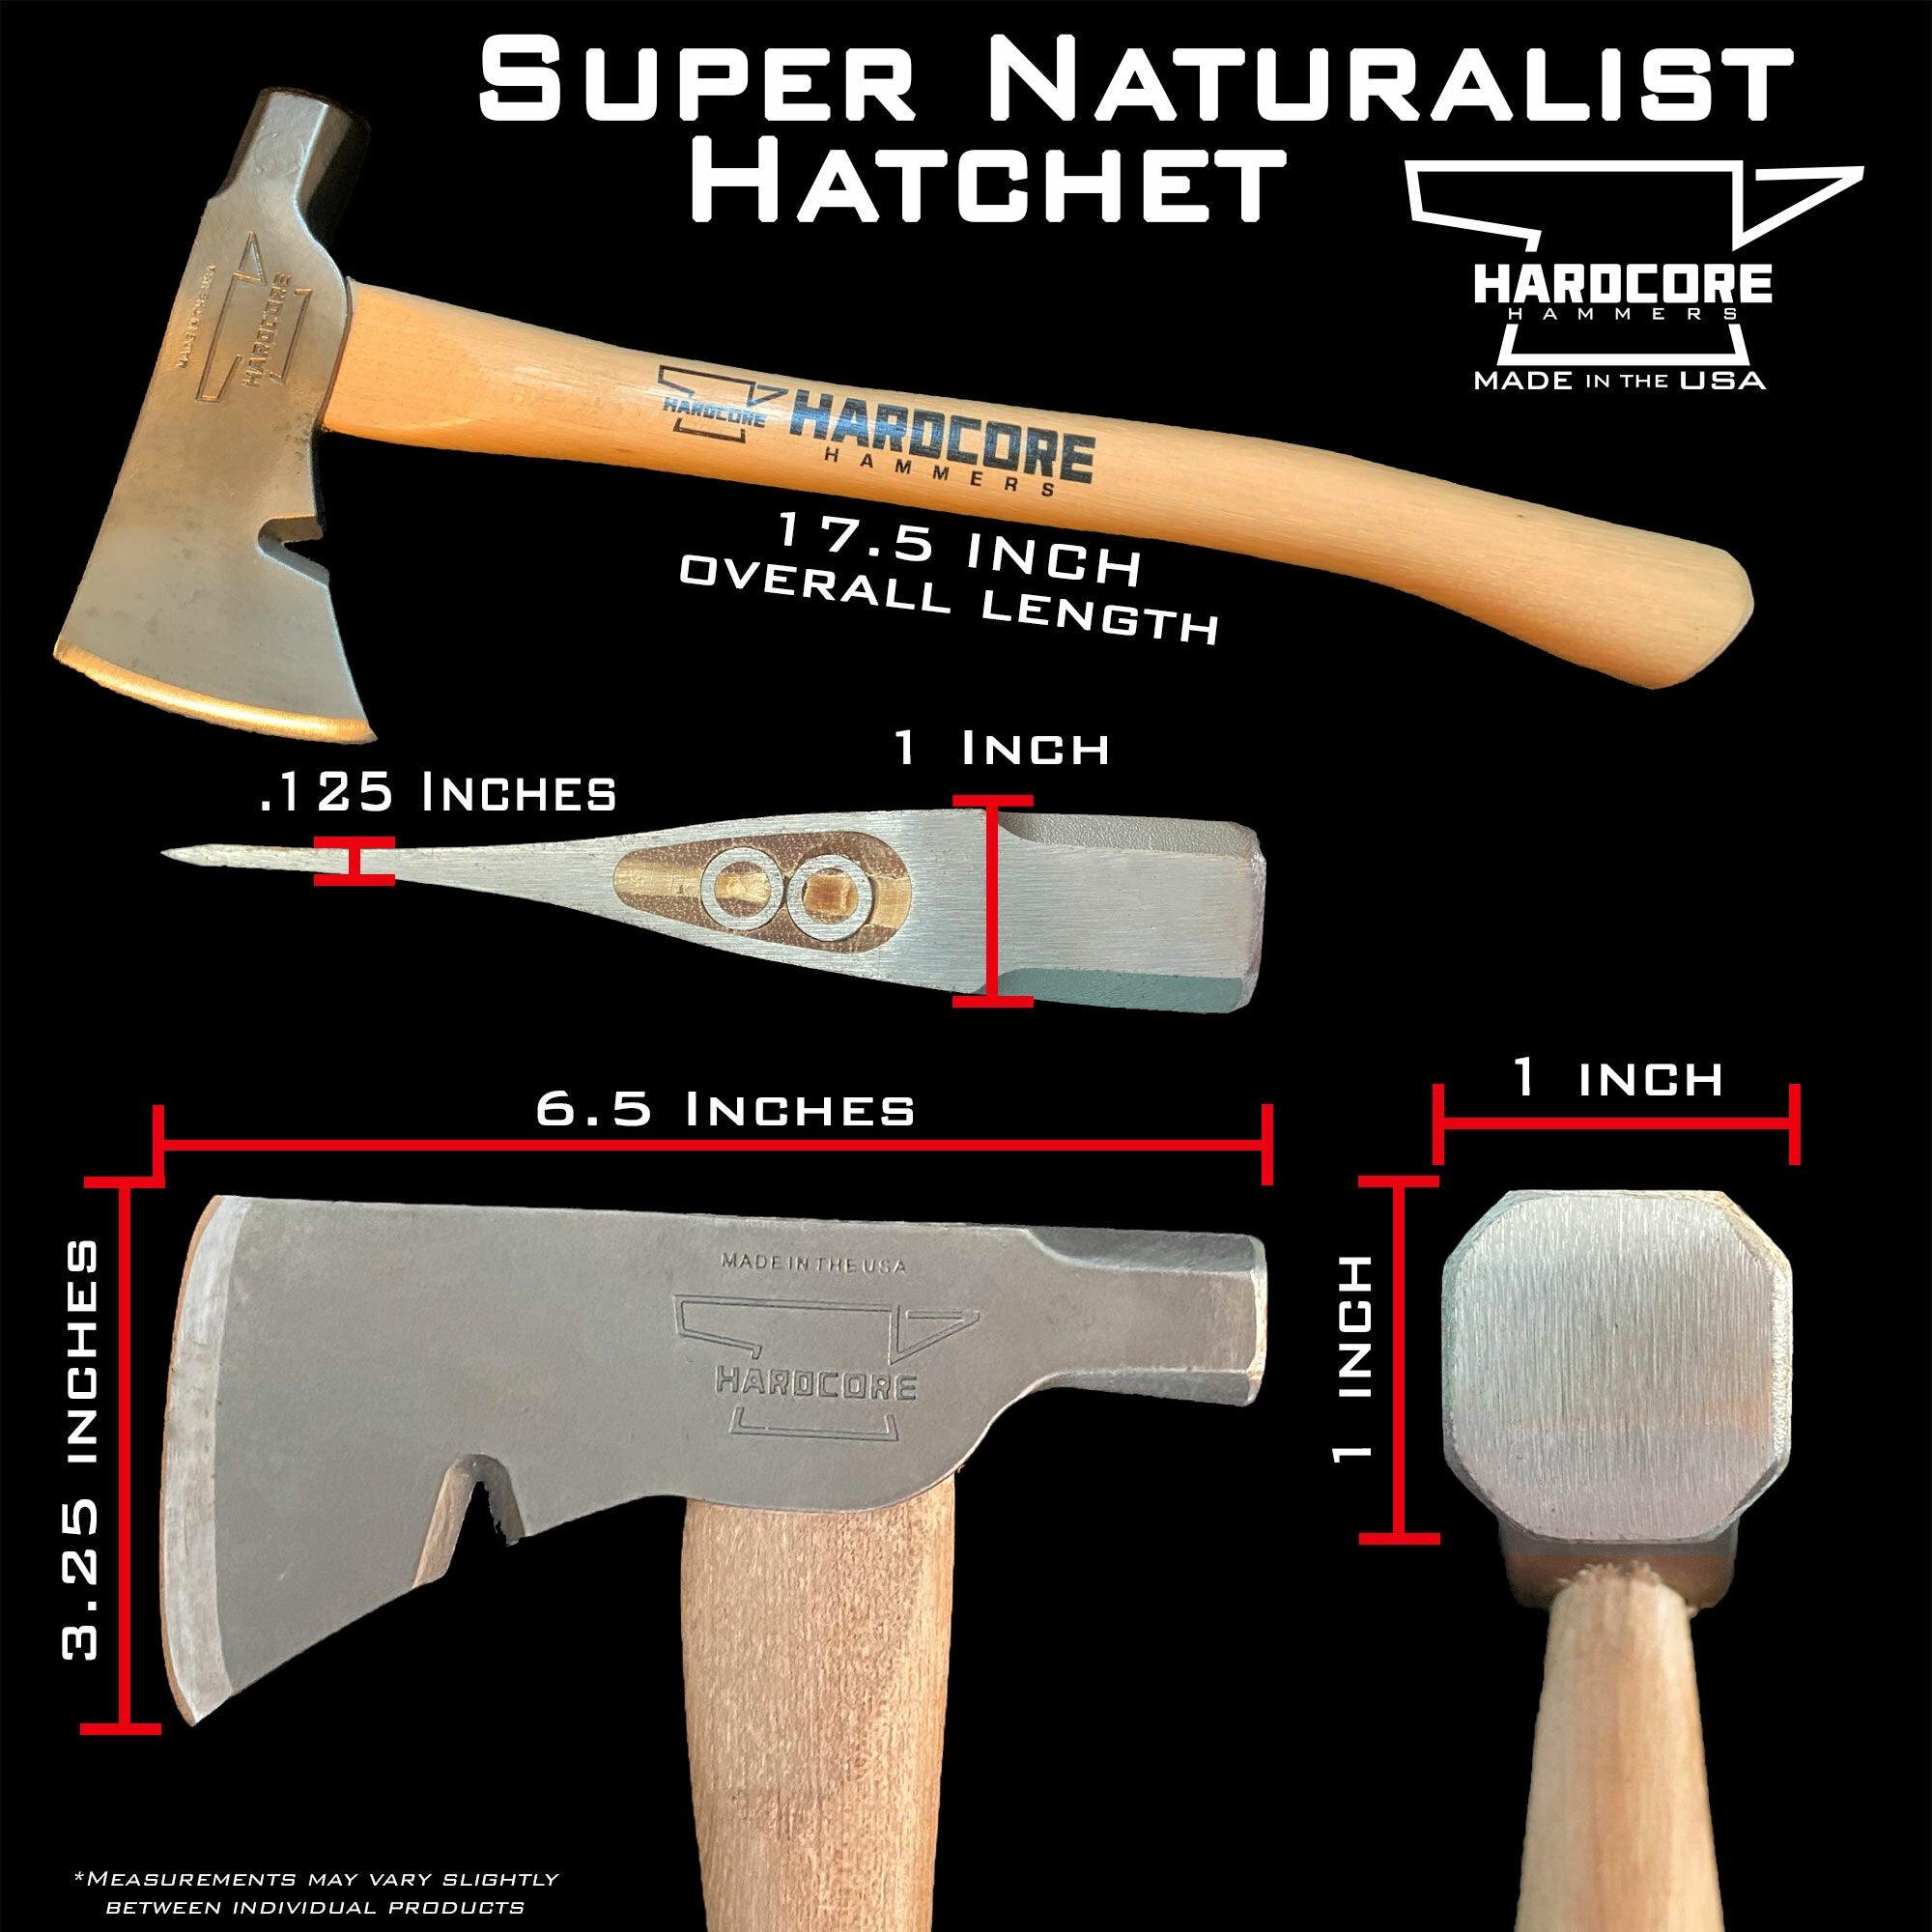 Hardcore Super Naturalist Hatchet - Plum Crazy - Trusted Gear Company LLC